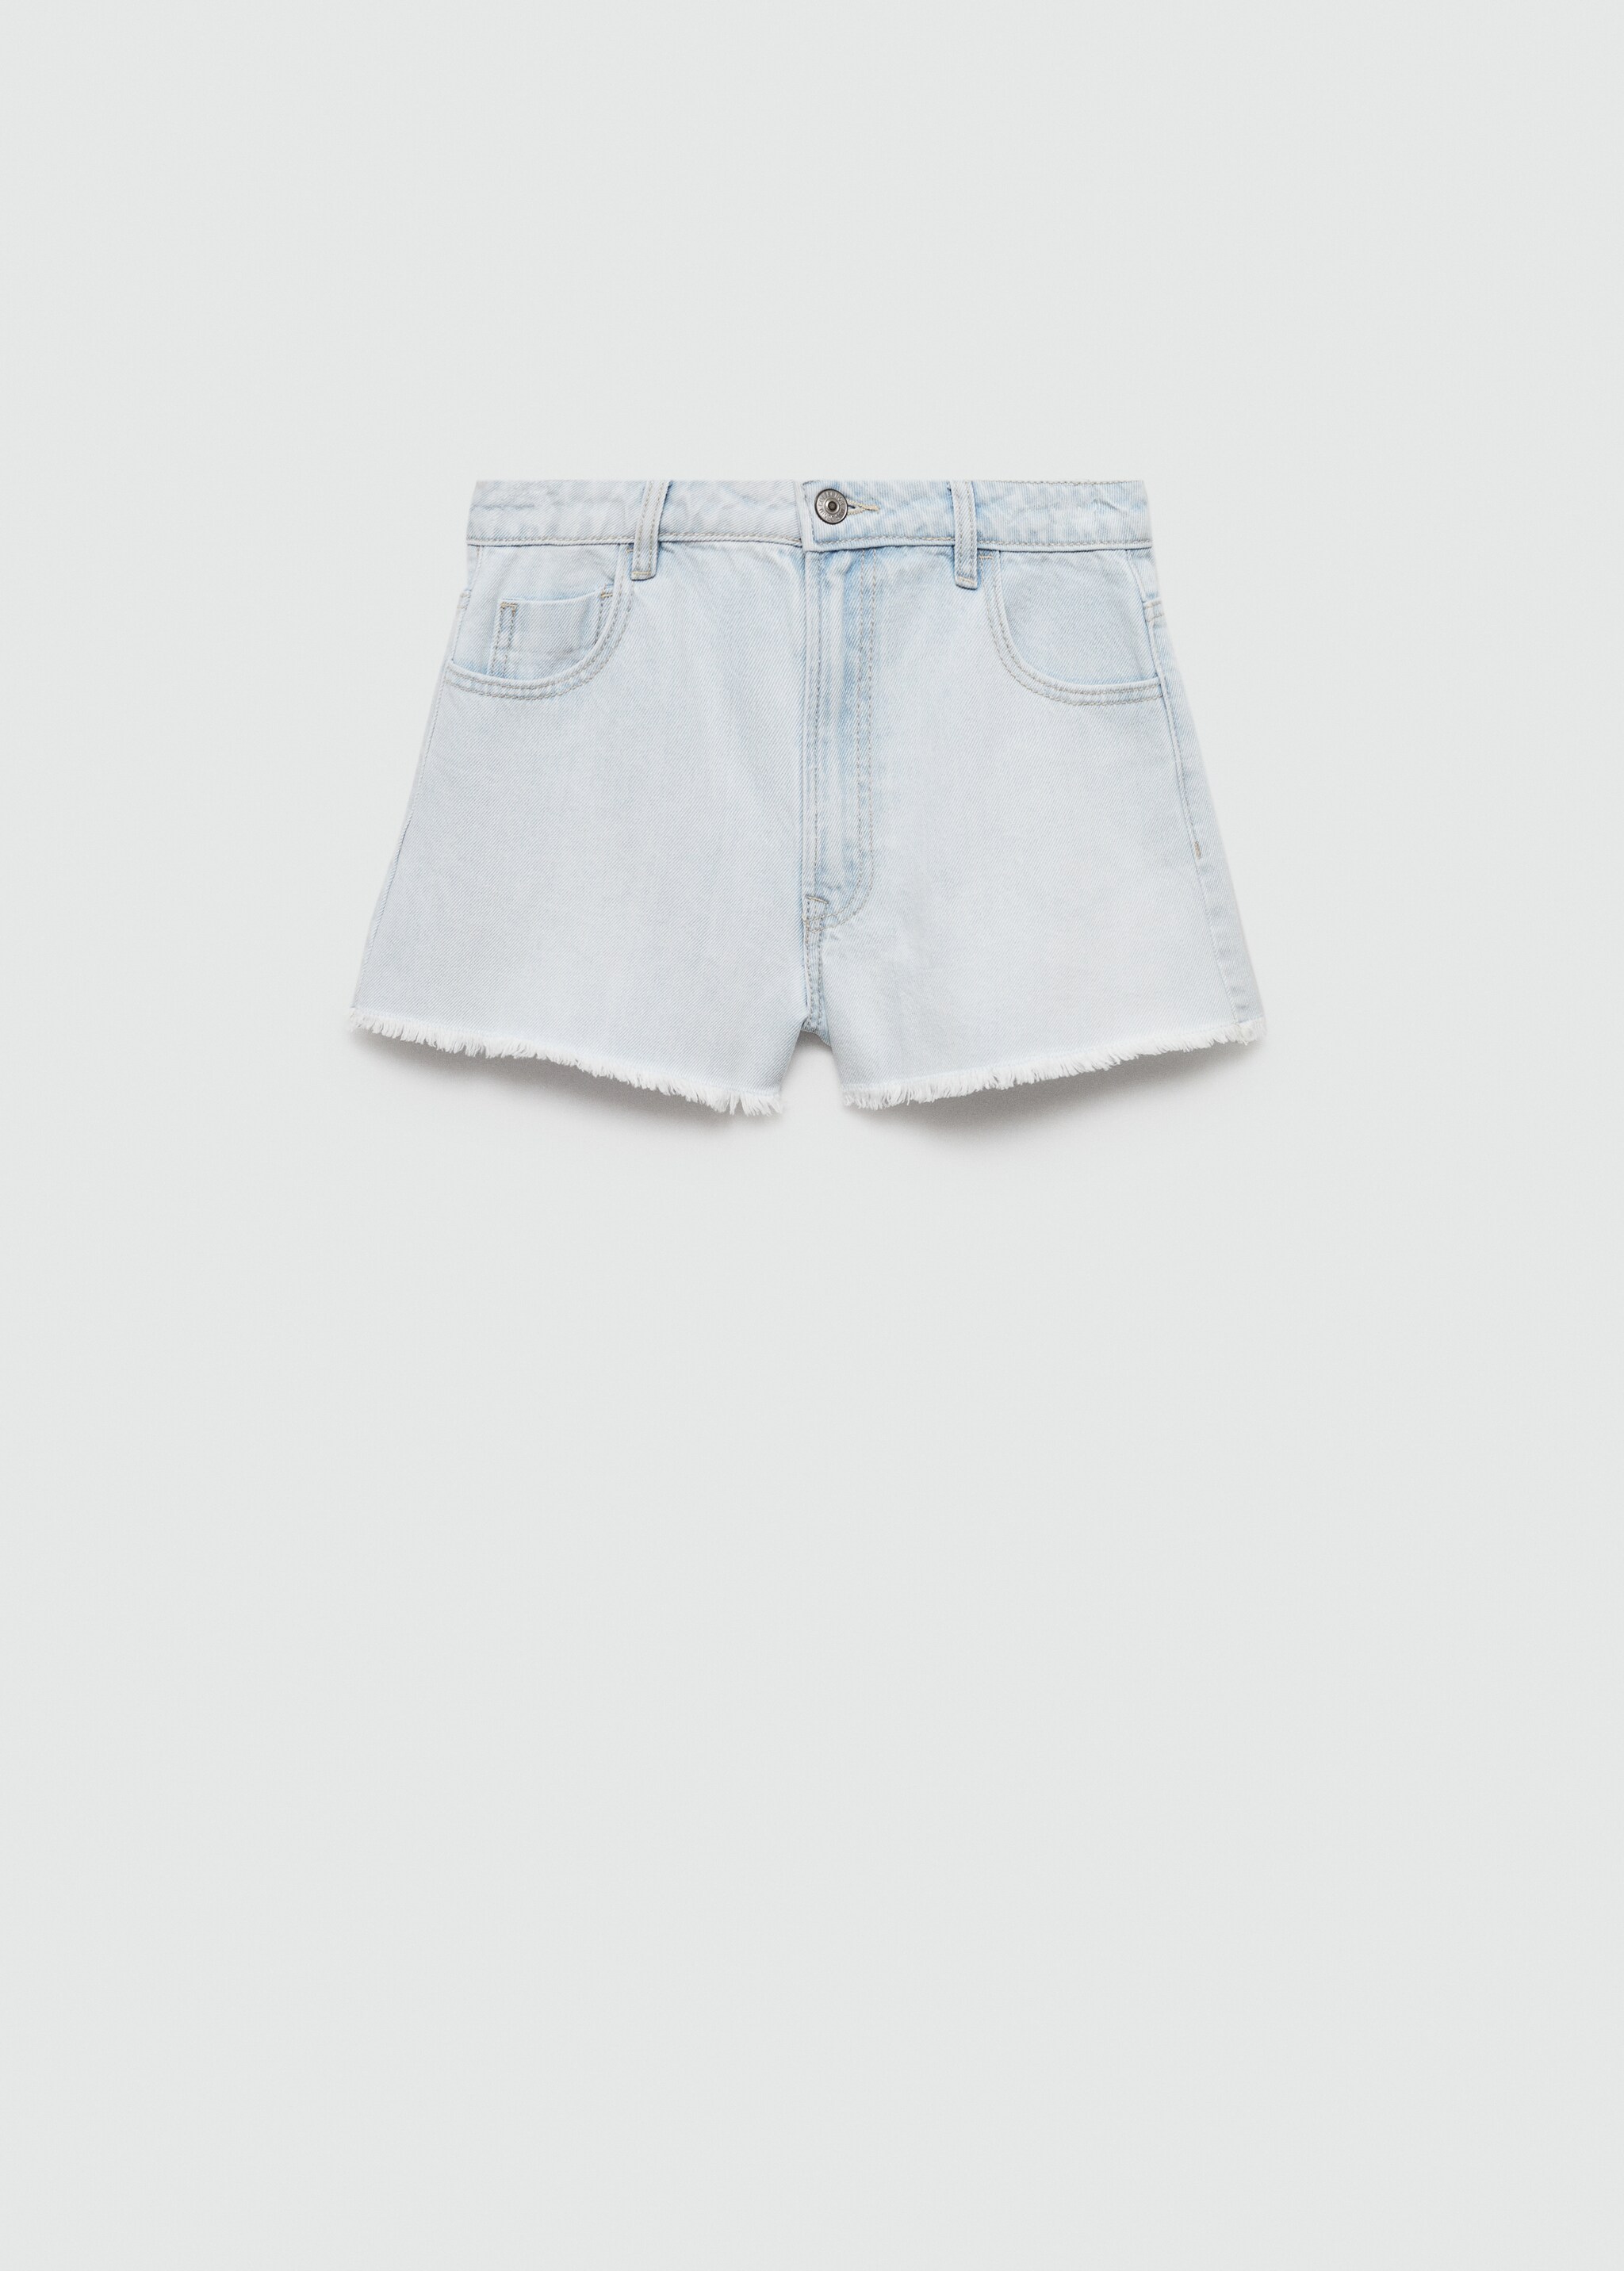 Frayed denim shorts - Article without model